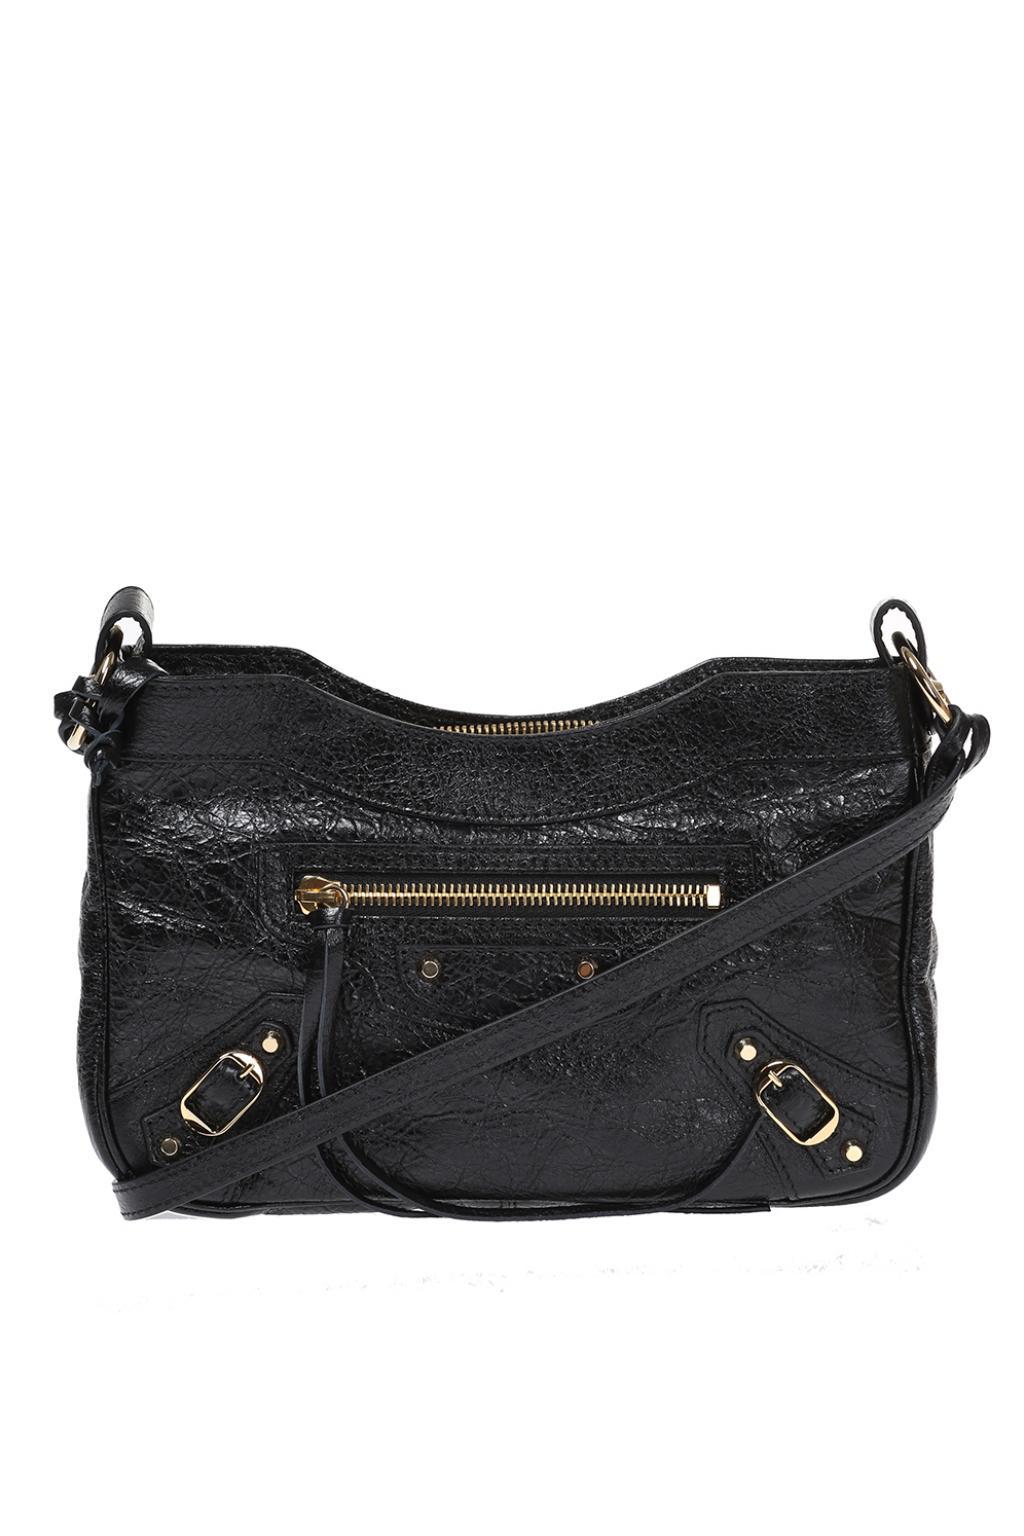 Balenciaga Leather 'hip' Shoulder Bag in Black - Lyst